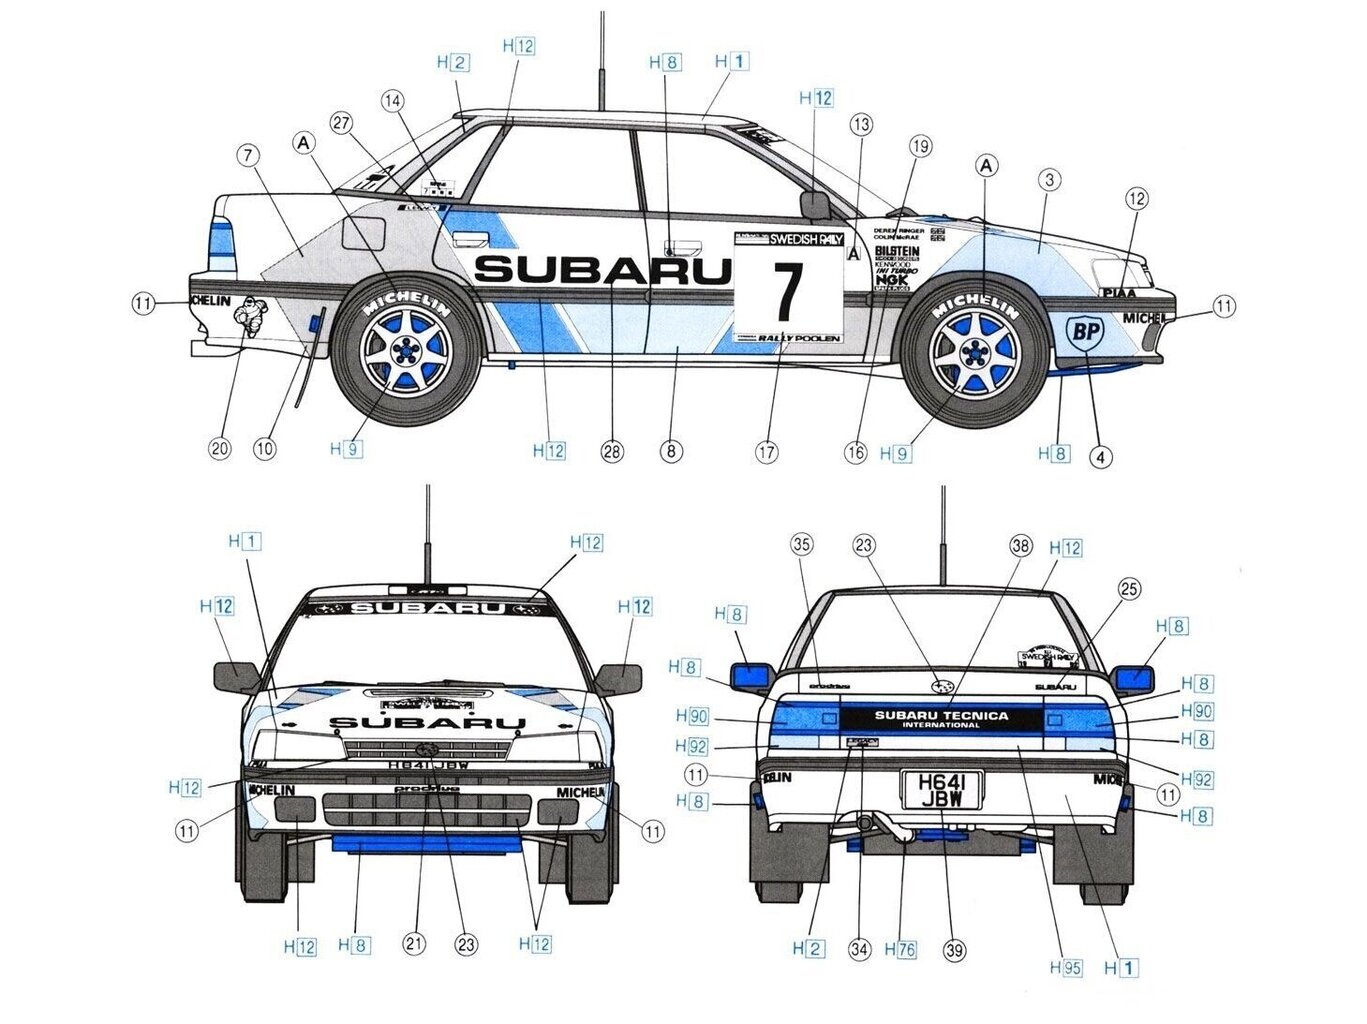 Hasegawa - Subaru Legacy RS 1992 Swedish Rally Limited Edition, 1/24, 20290 cena un informācija | Konstruktori | 220.lv